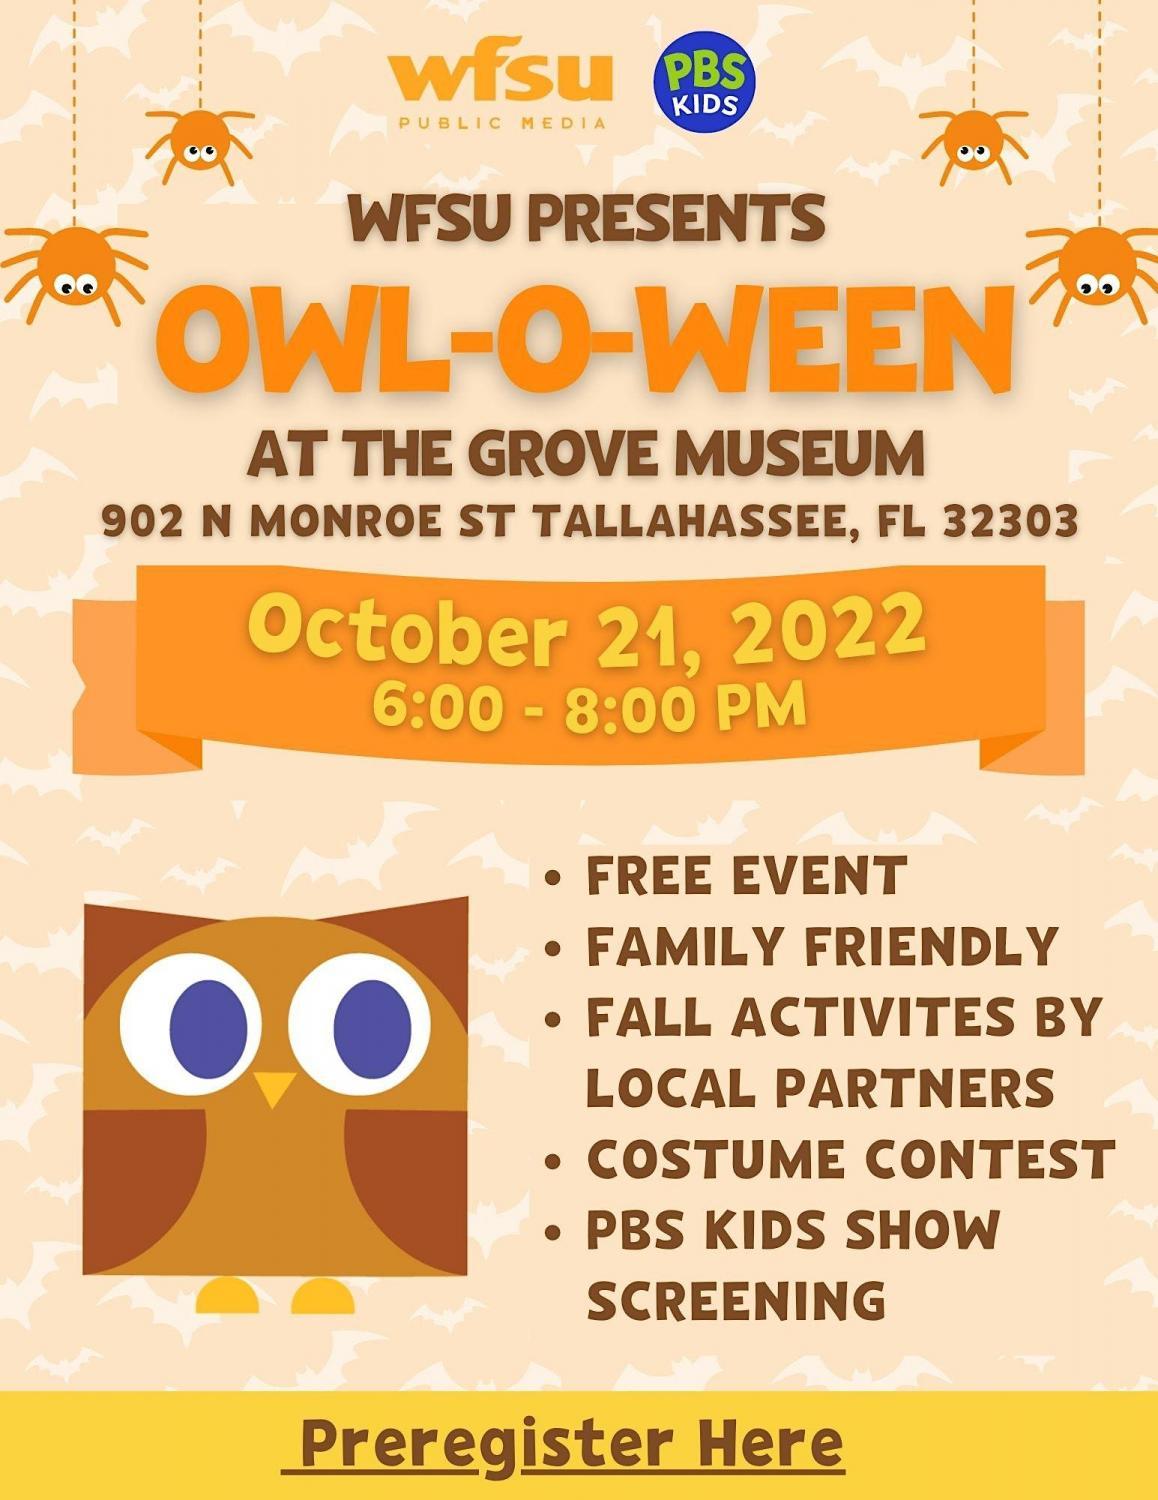 Owl-O-Ween in The Grove Museum!
Fri Oct 21, 7:00 PM - Fri Oct 21, 7:00 PM